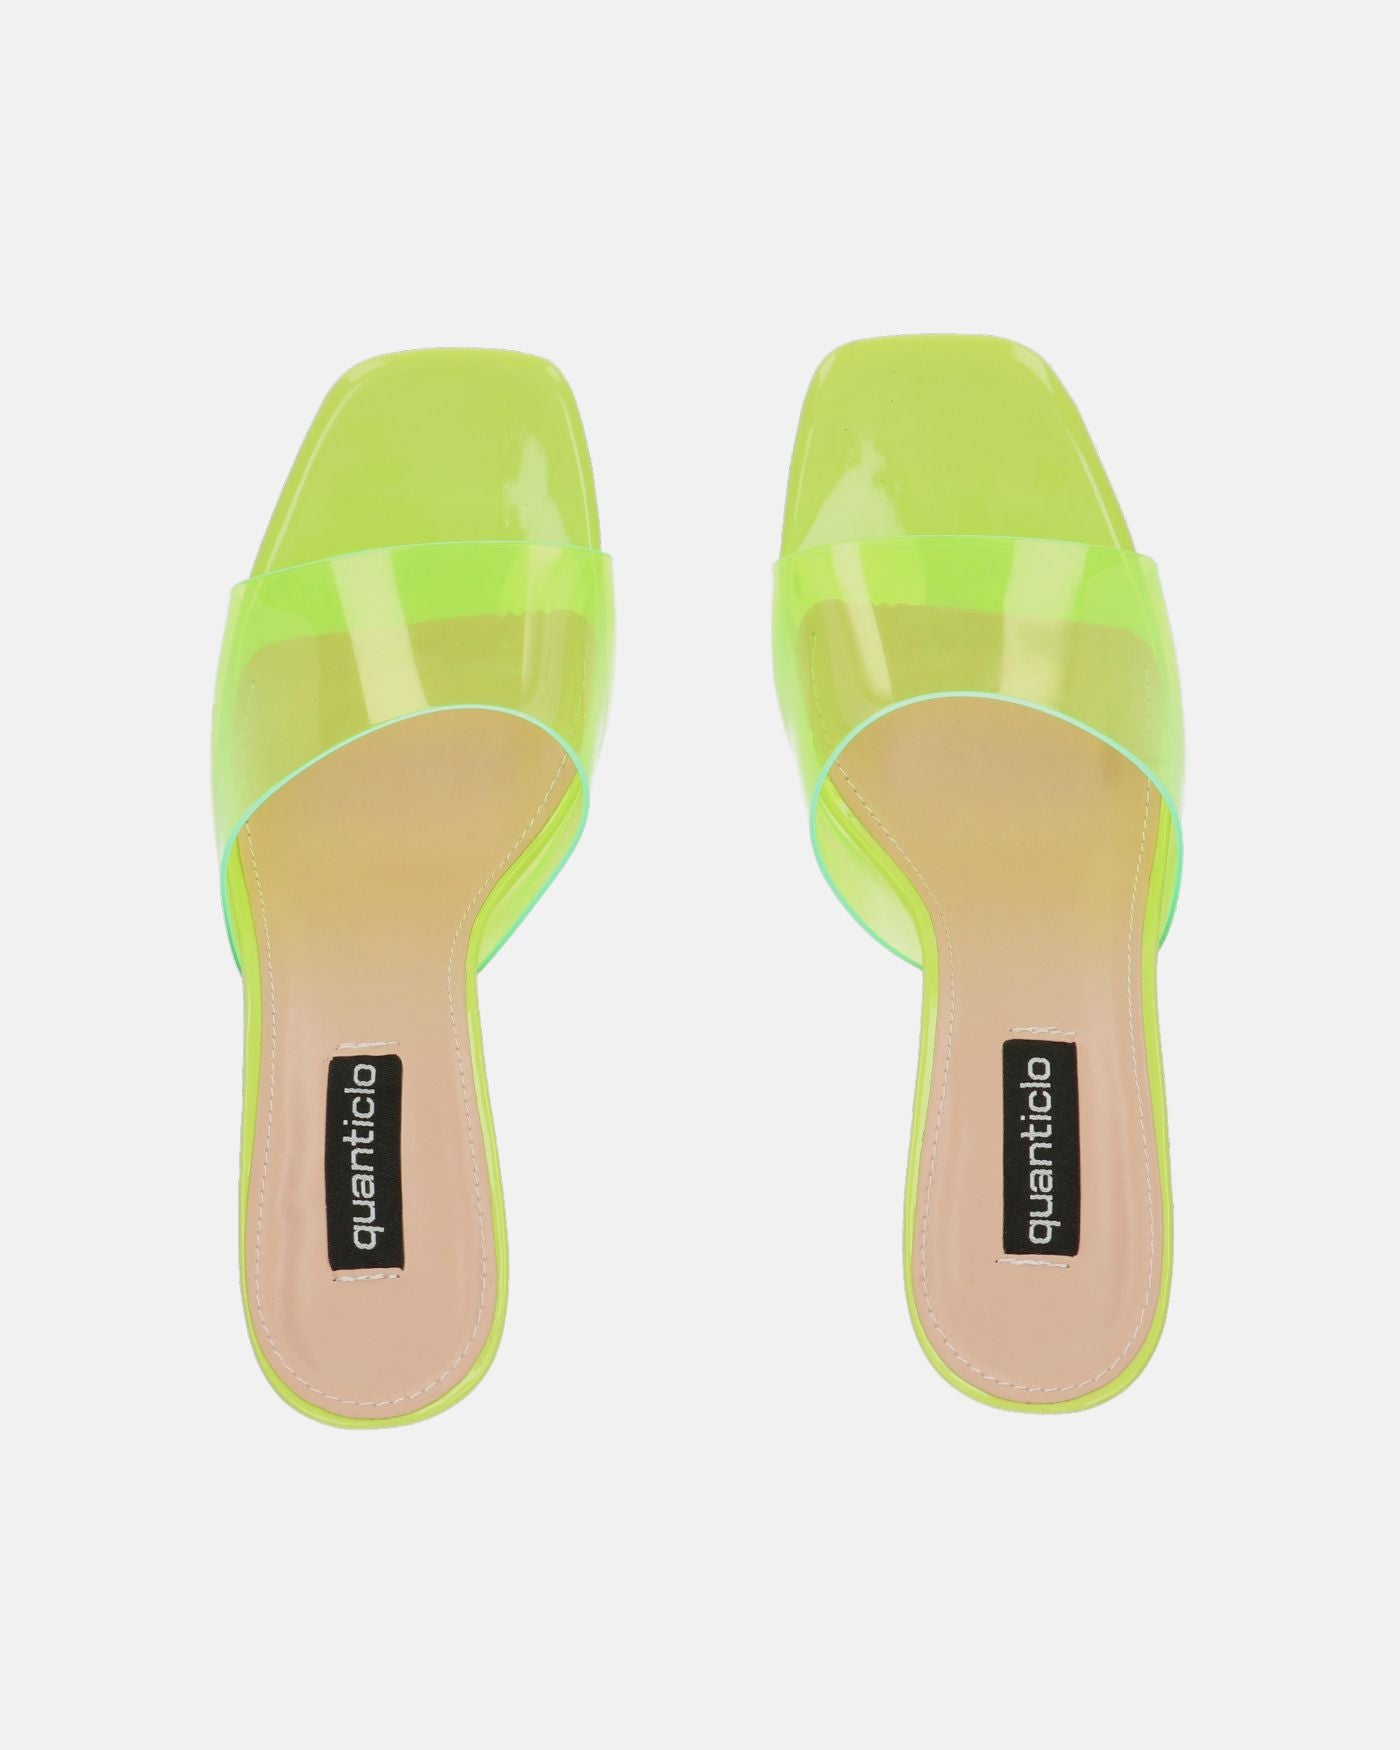 FIAMMA - sandale à talon en plexiglas jaune avec semelle en PU